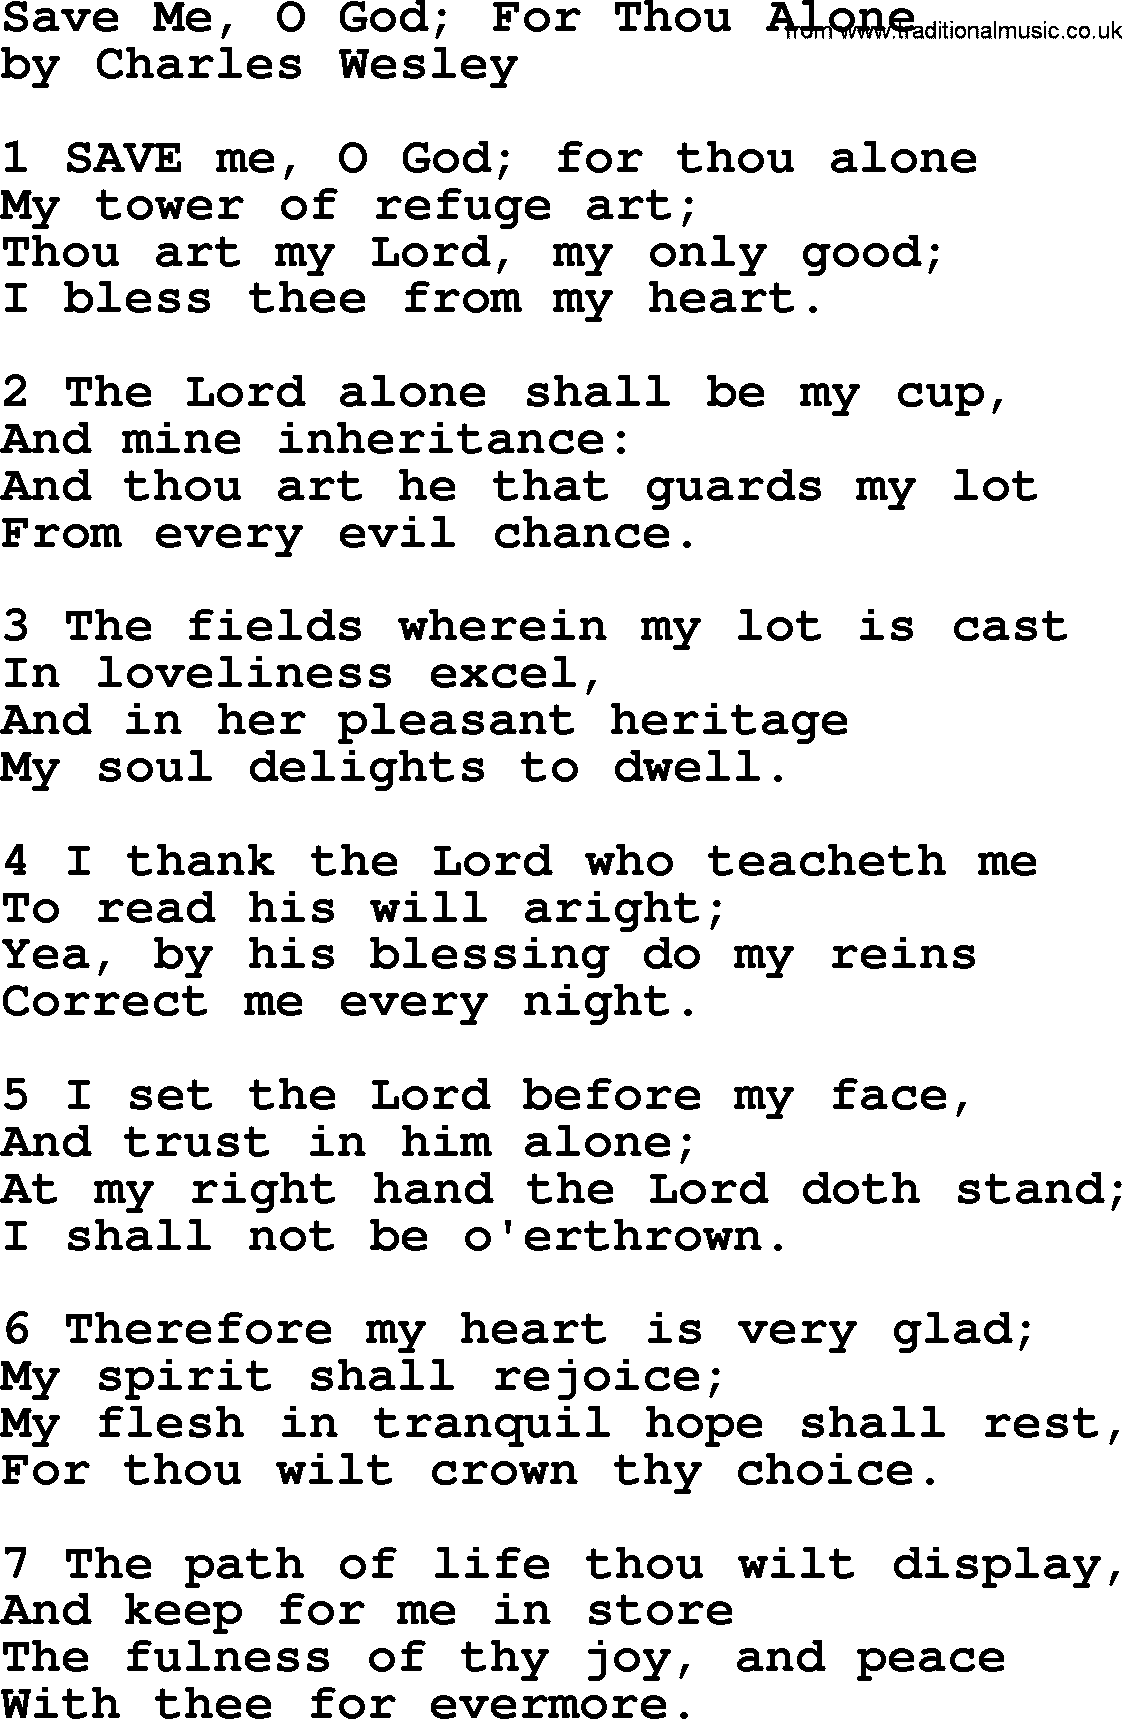 Charles Wesley hymn: Save Me, O God; For Thou Alone, lyrics